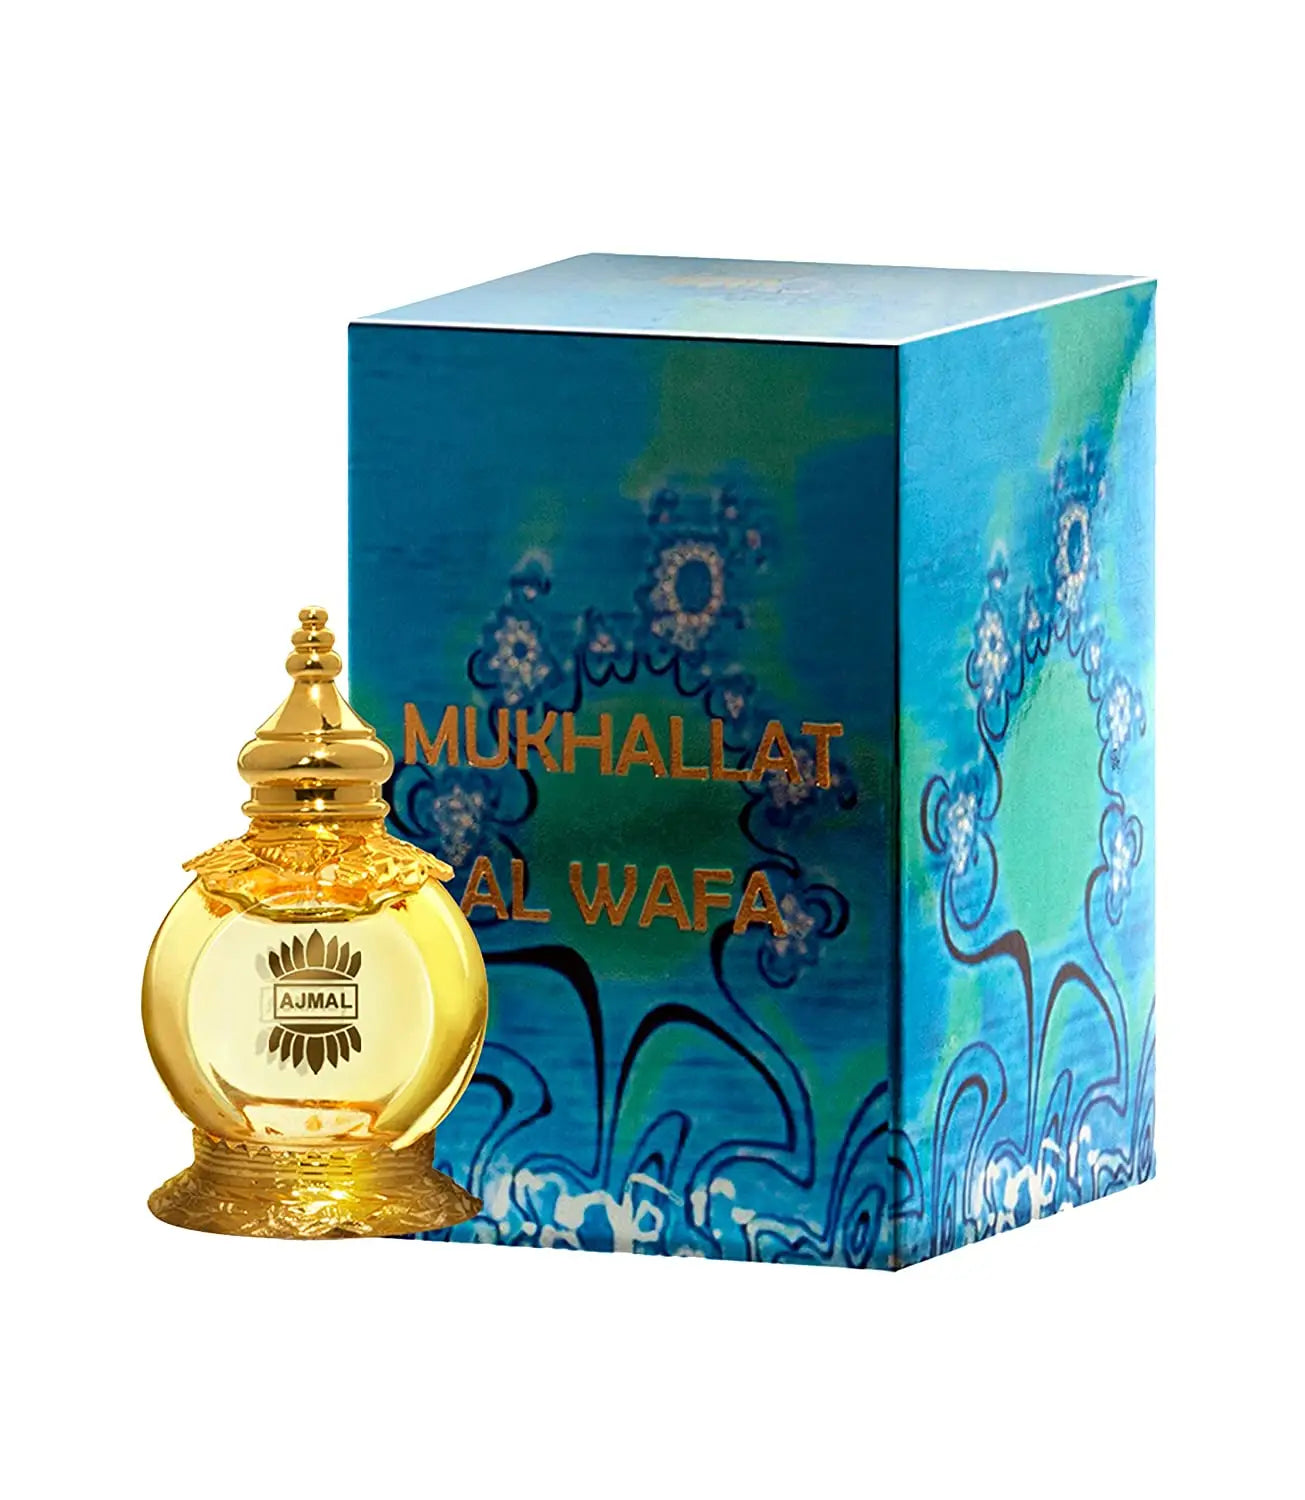 Ajmal Mukhallat Al Wafa concentrated Perfume12ml